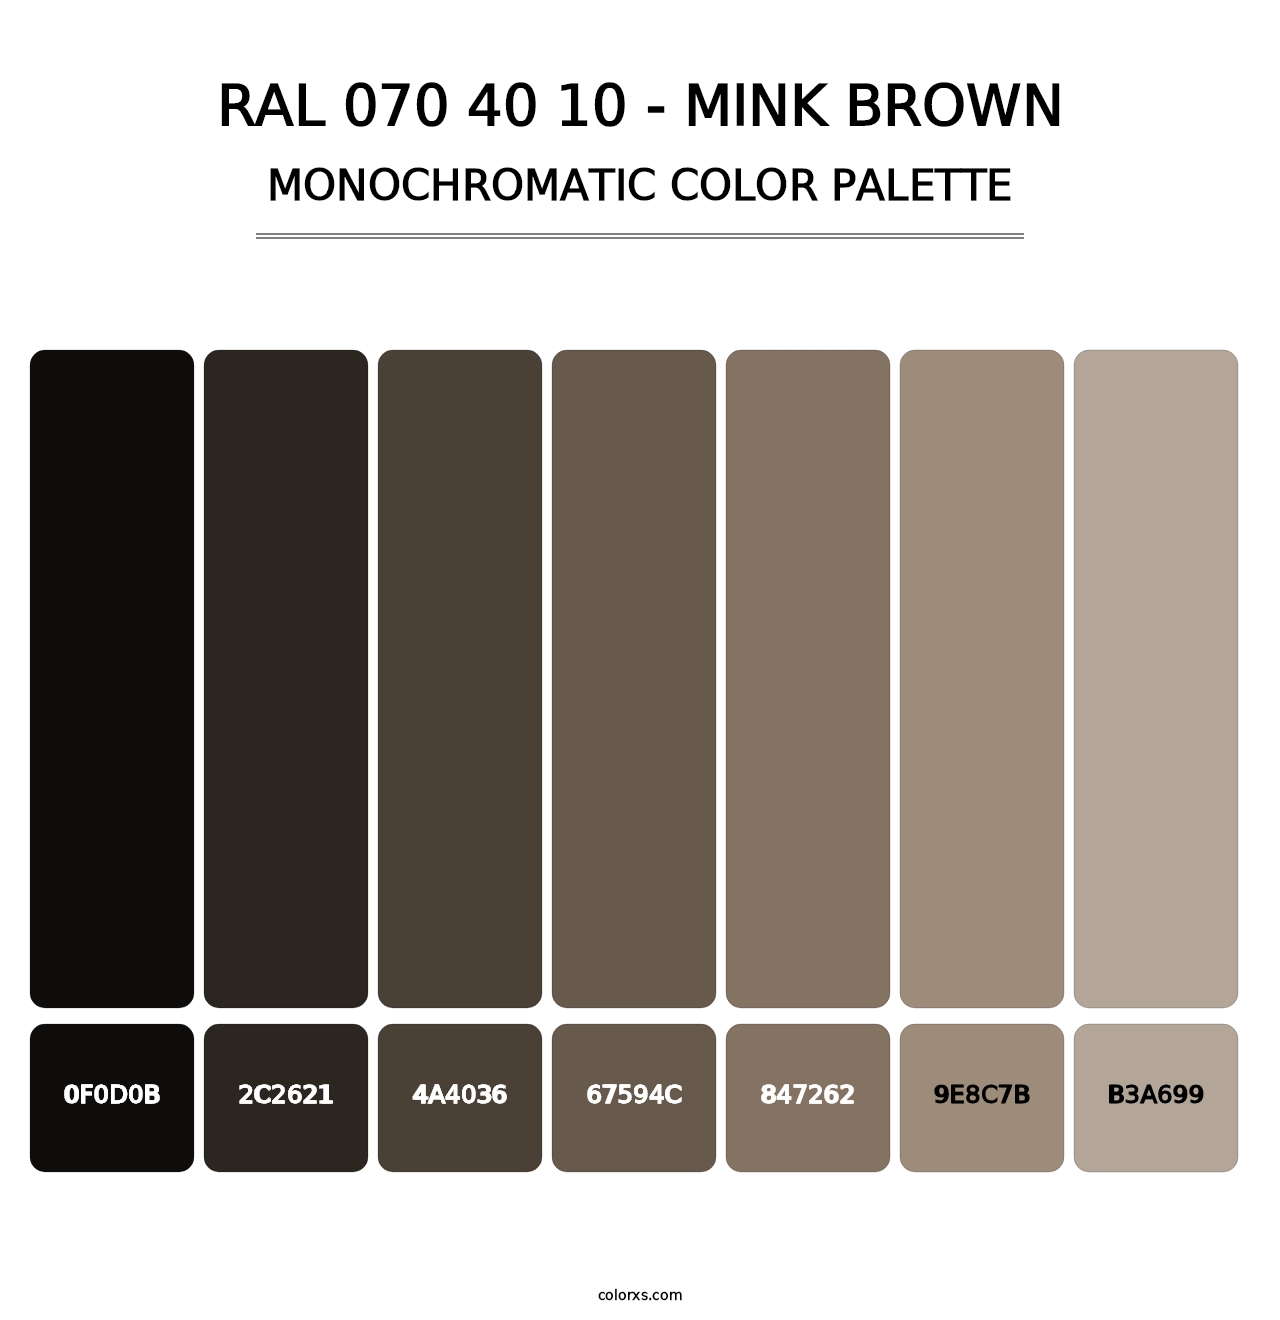 RAL 070 40 10 - Mink Brown - Monochromatic Color Palette